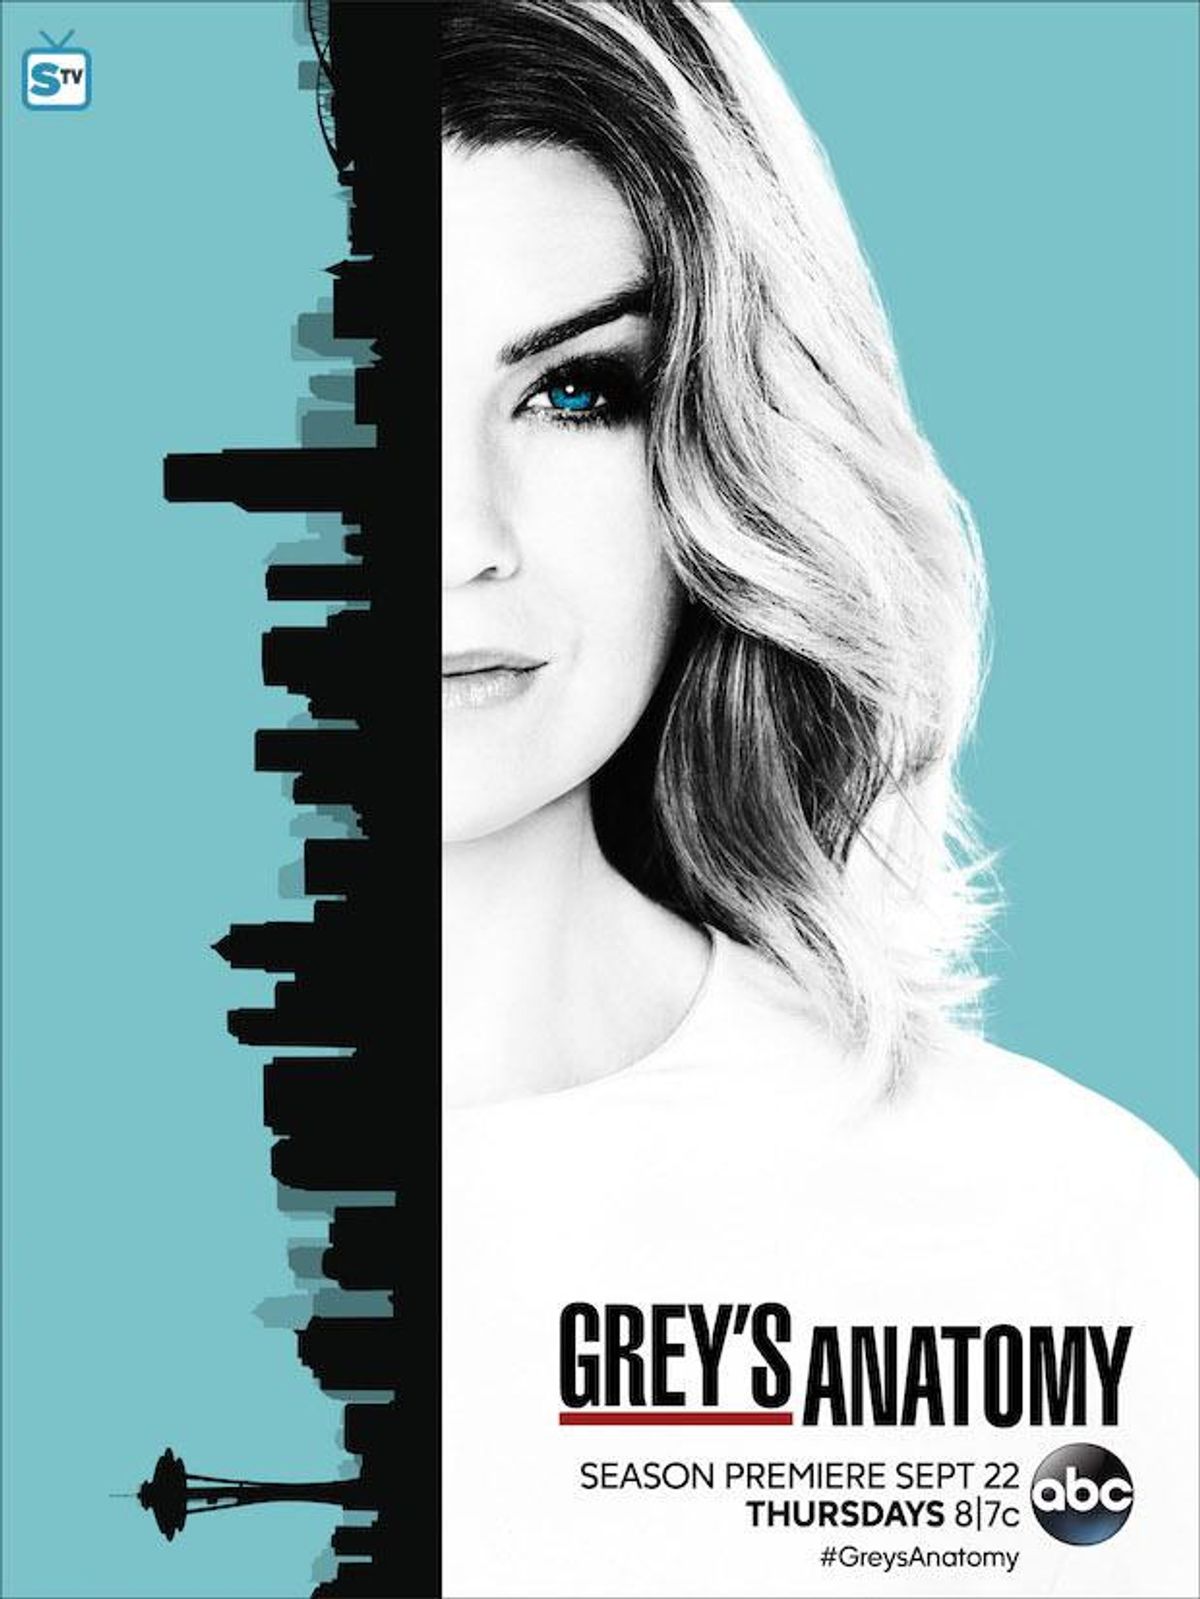 Preparing For Season 13 Of "Grey's Anatomy"